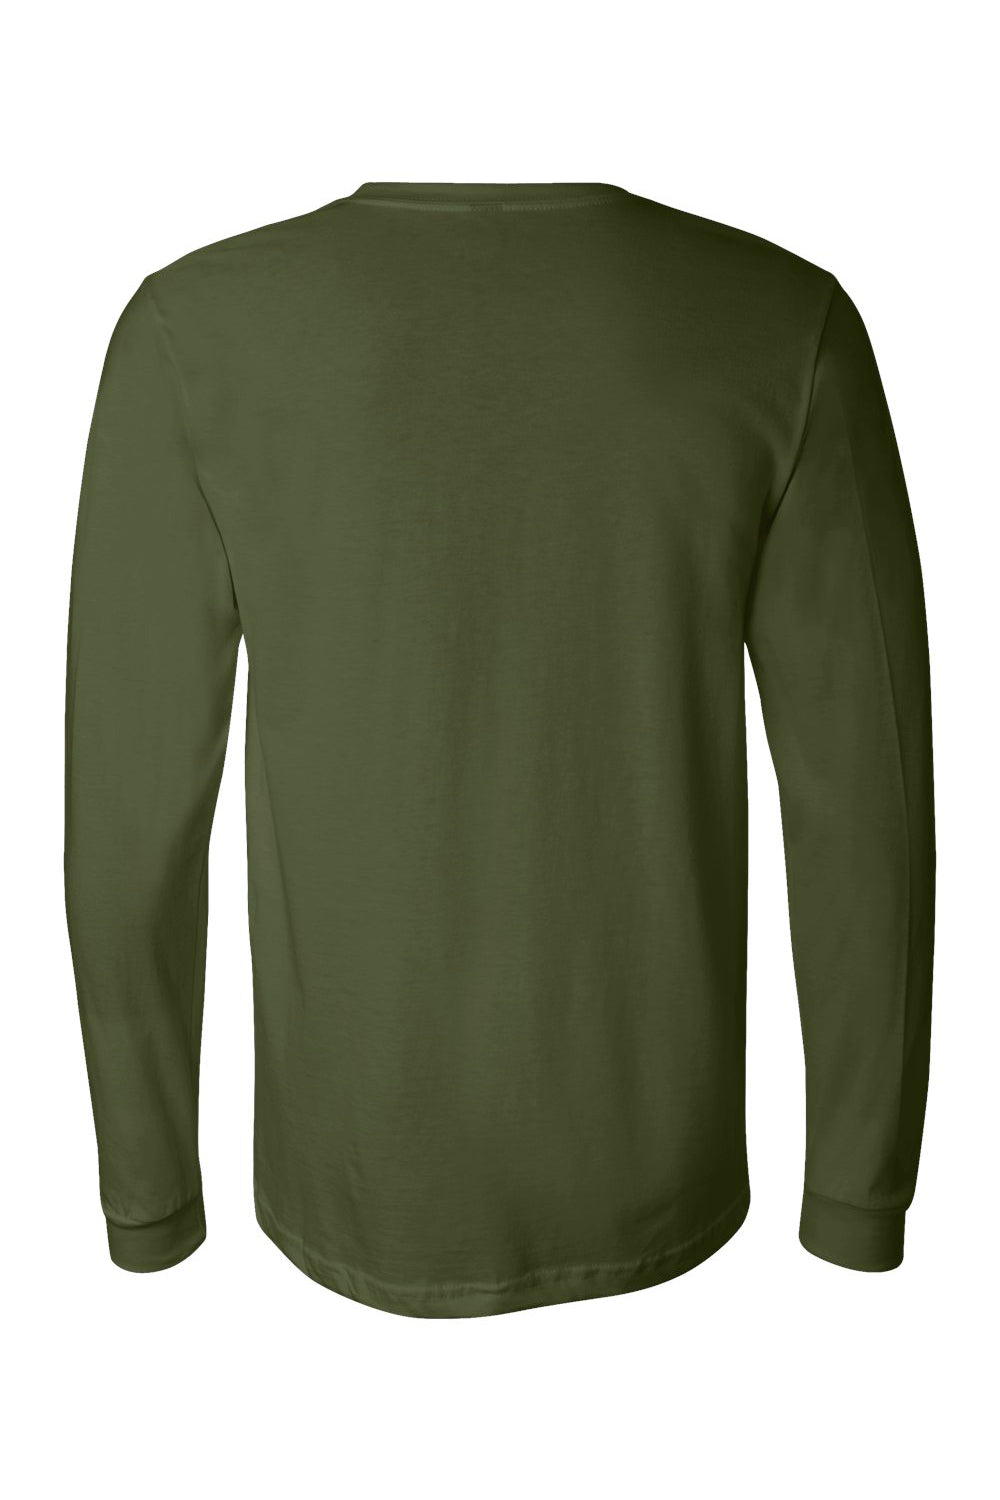 Bella + Canvas BC3501/3501 Mens Jersey Long Sleeve Crewneck T-Shirt Olive Green Flat Back